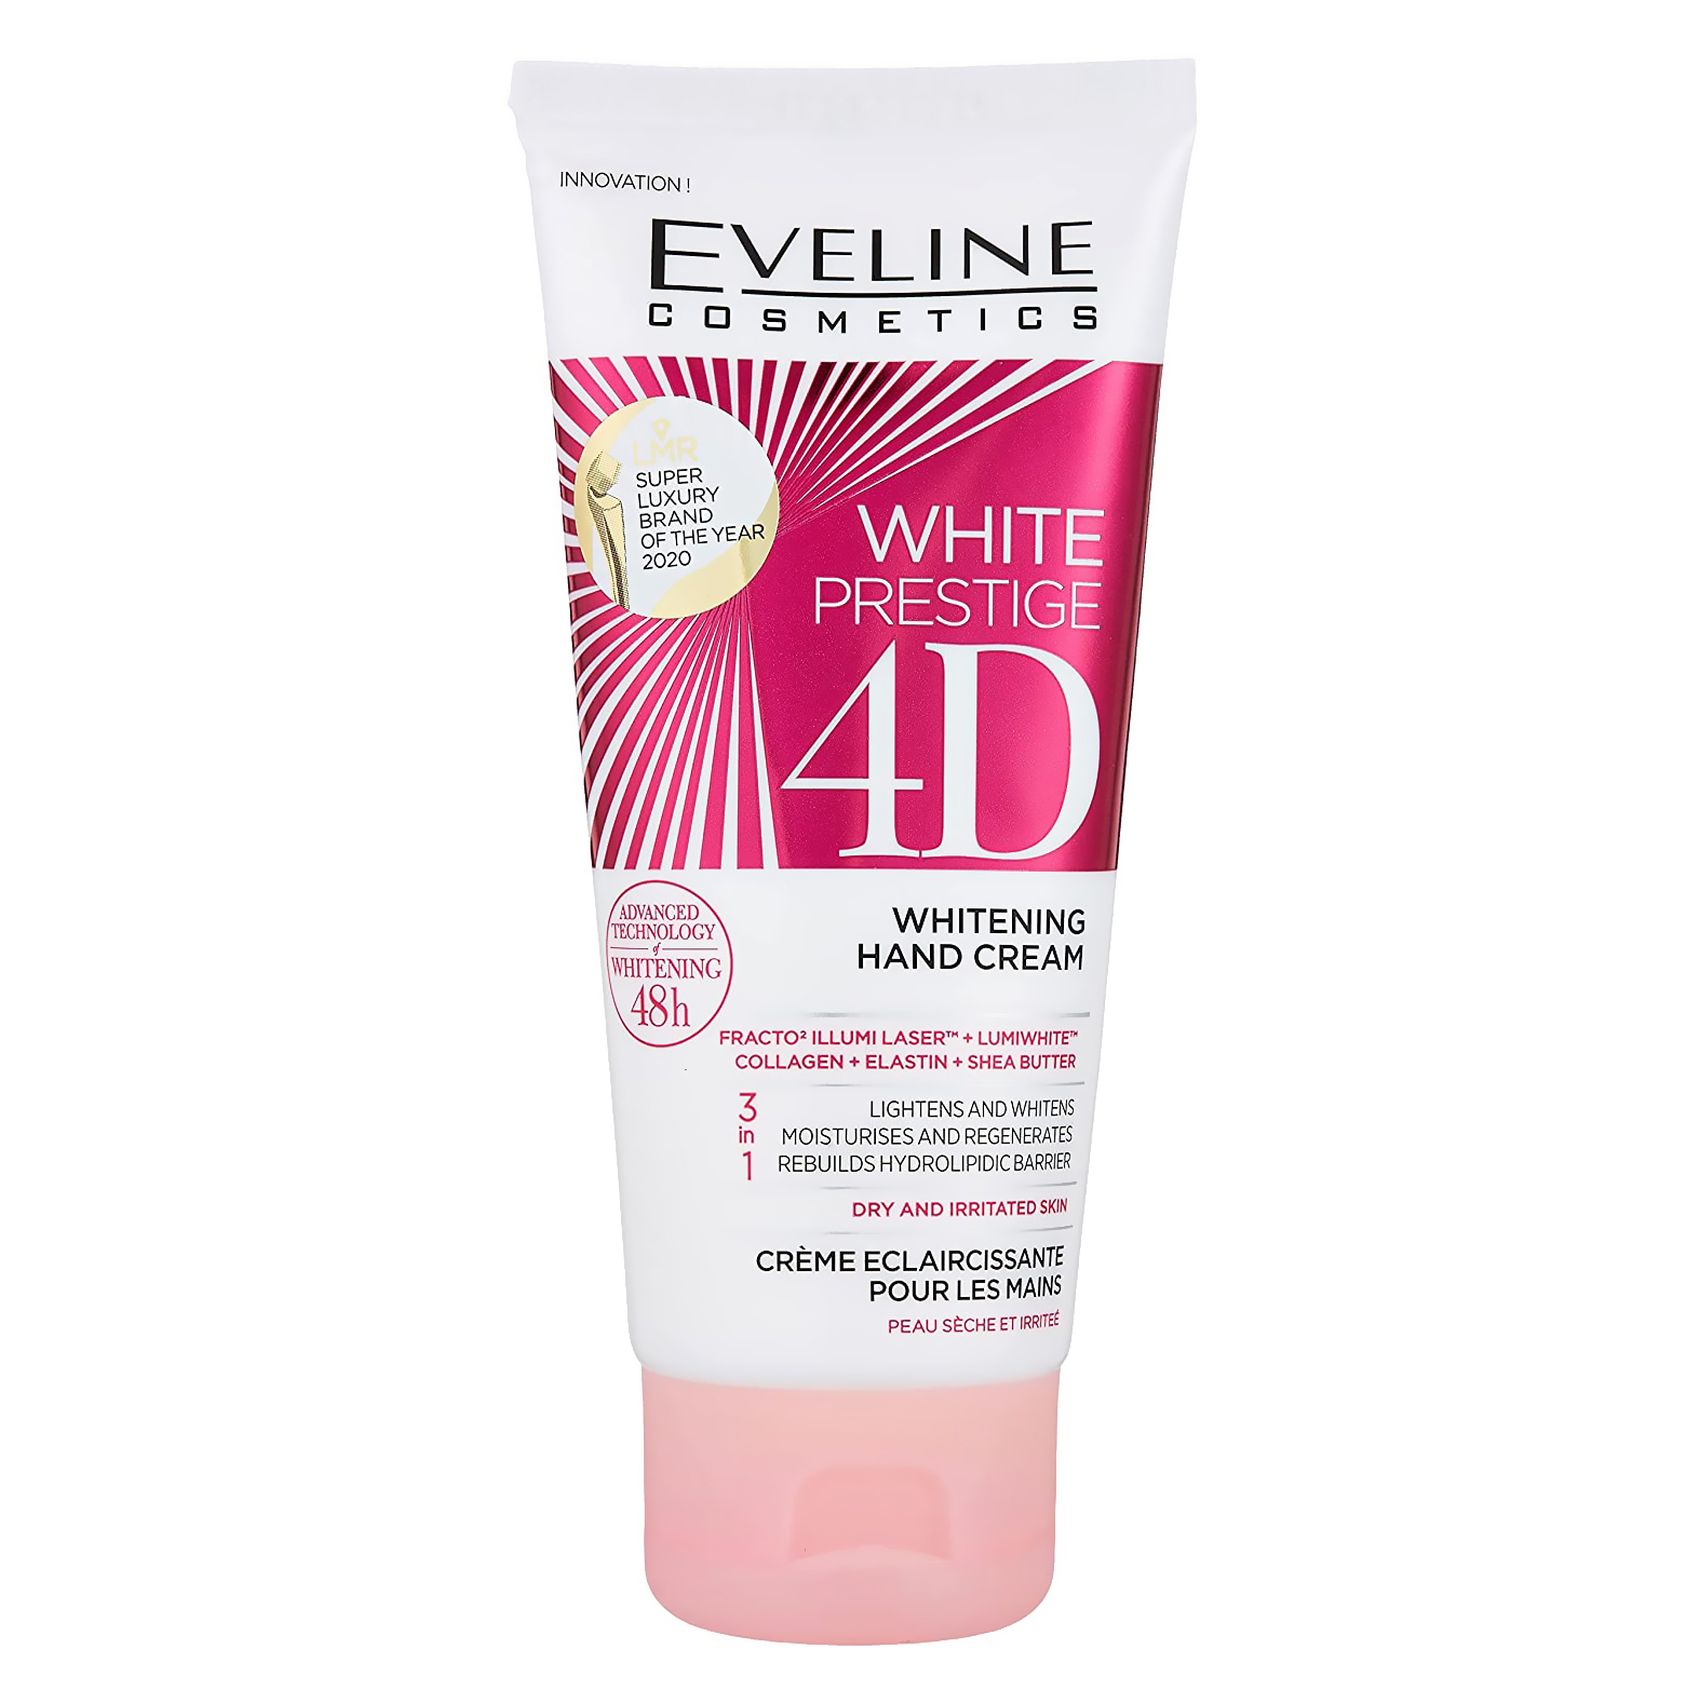 Eveline Cosmetics White Prestige 4D Whitening Hand Cream Brightens Skin Innovative White 100ml